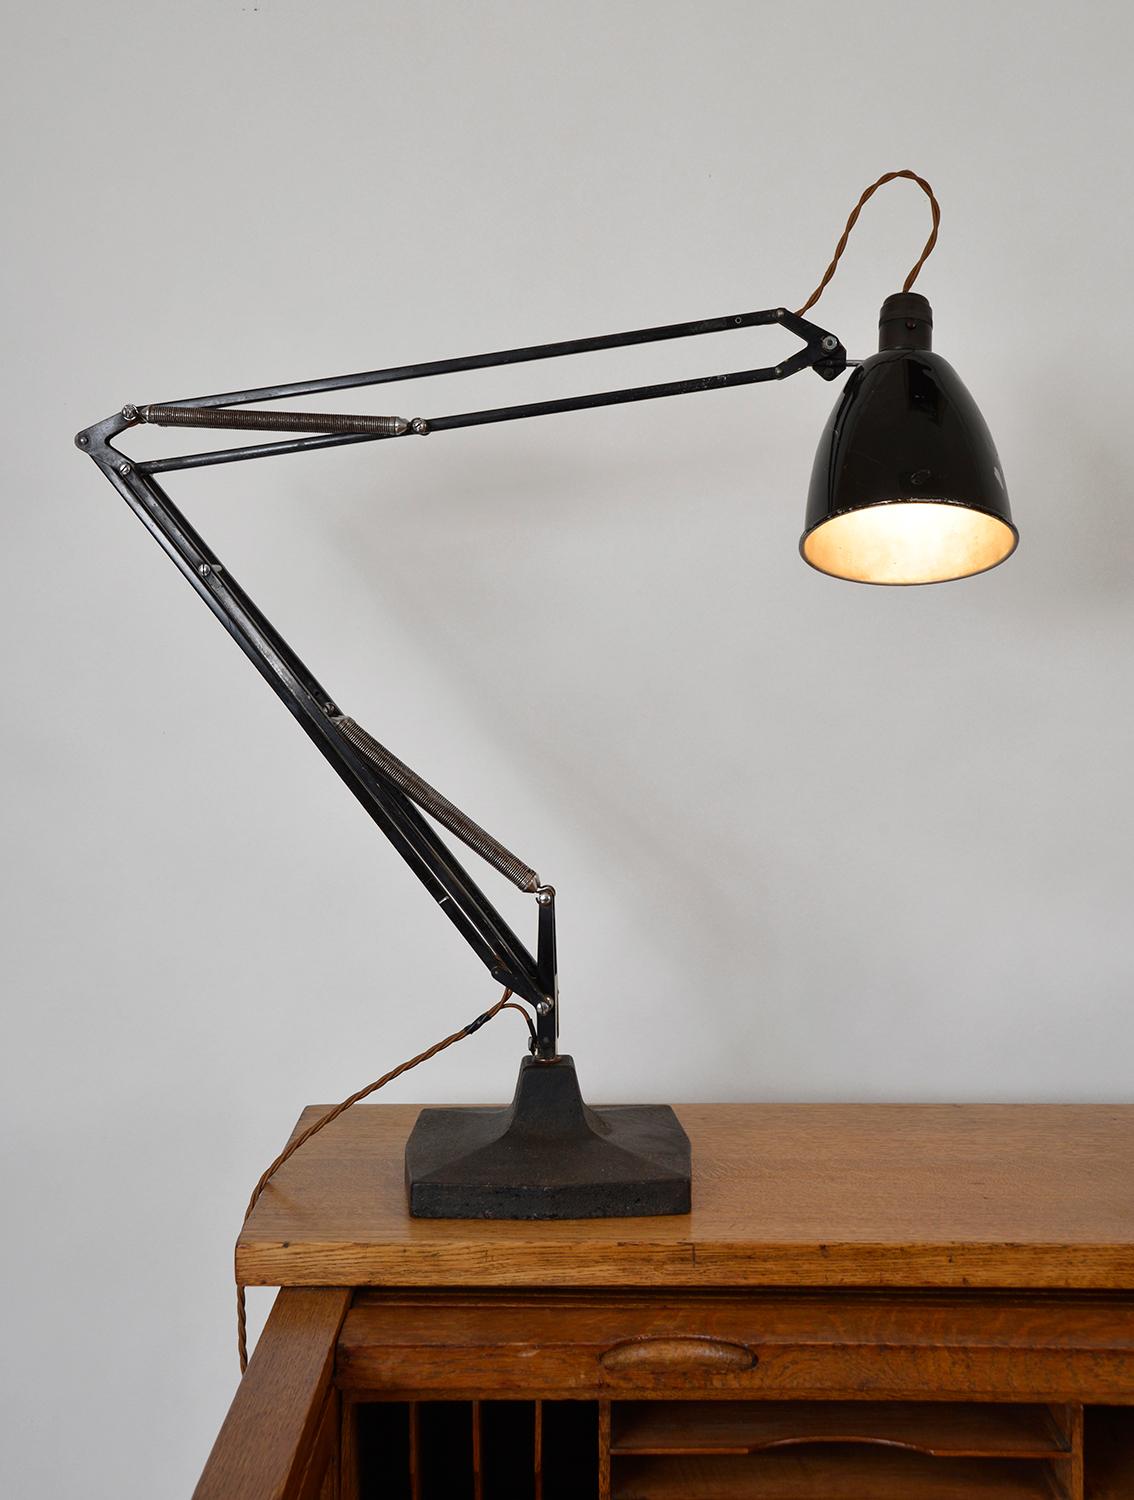 Aluminum 1940s Herbert Terry Anglepoise Draughtsman's Task Desk Lamp No 1209 Industrial For Sale